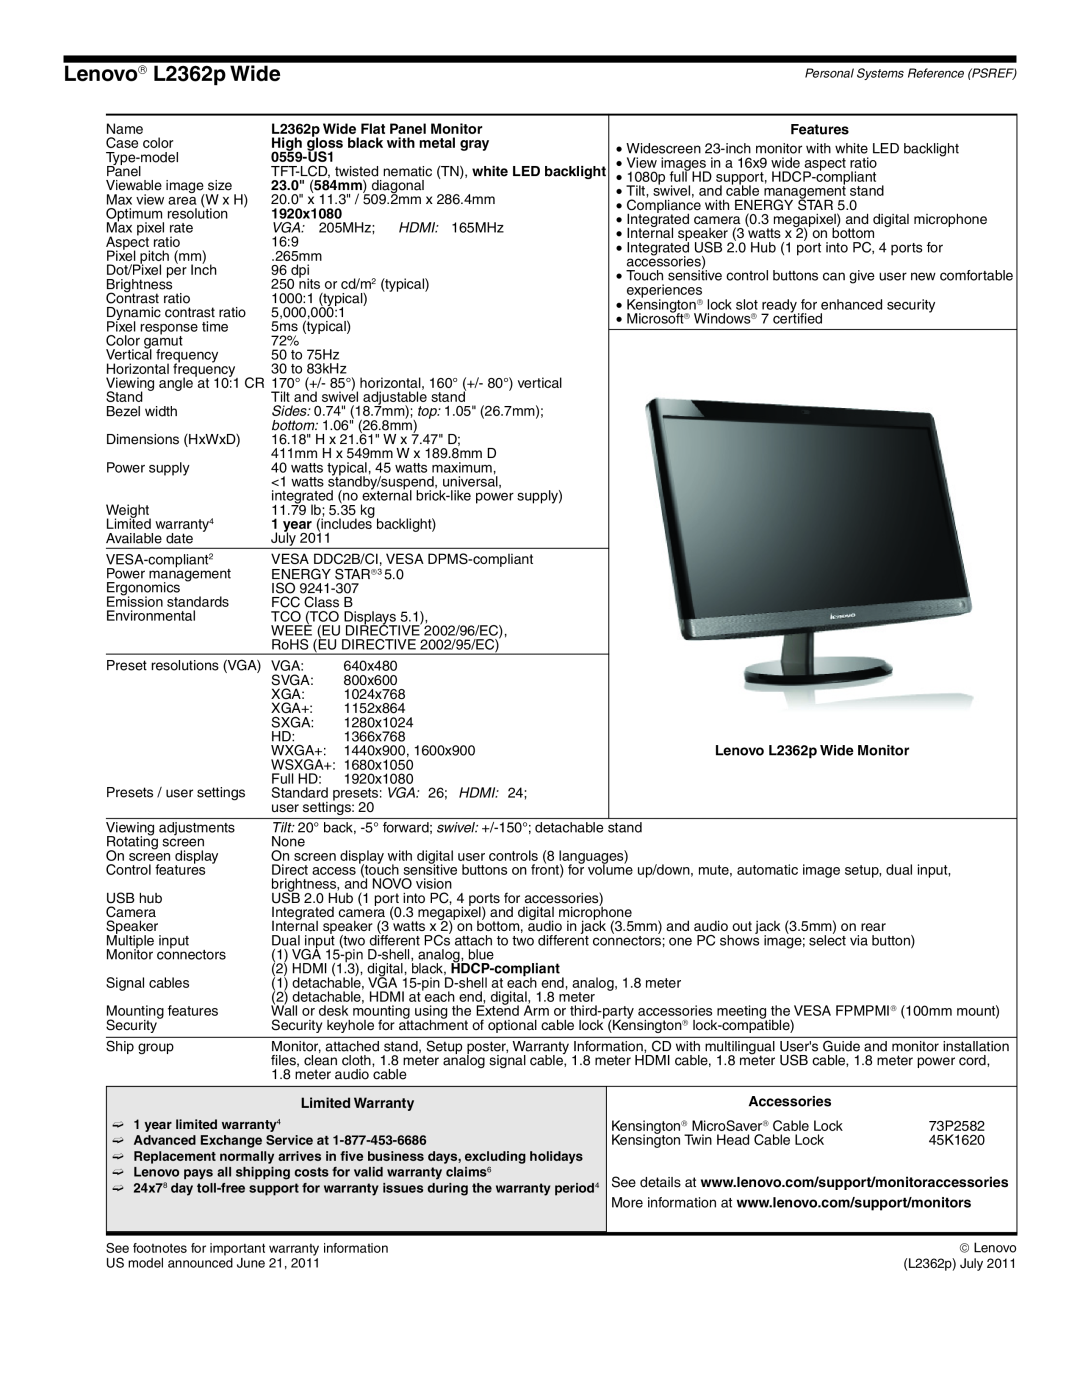 Lenovo L2363D manual Lenovo→ L2362p Wide, VGA 205MHz HDMI, Hdmi 